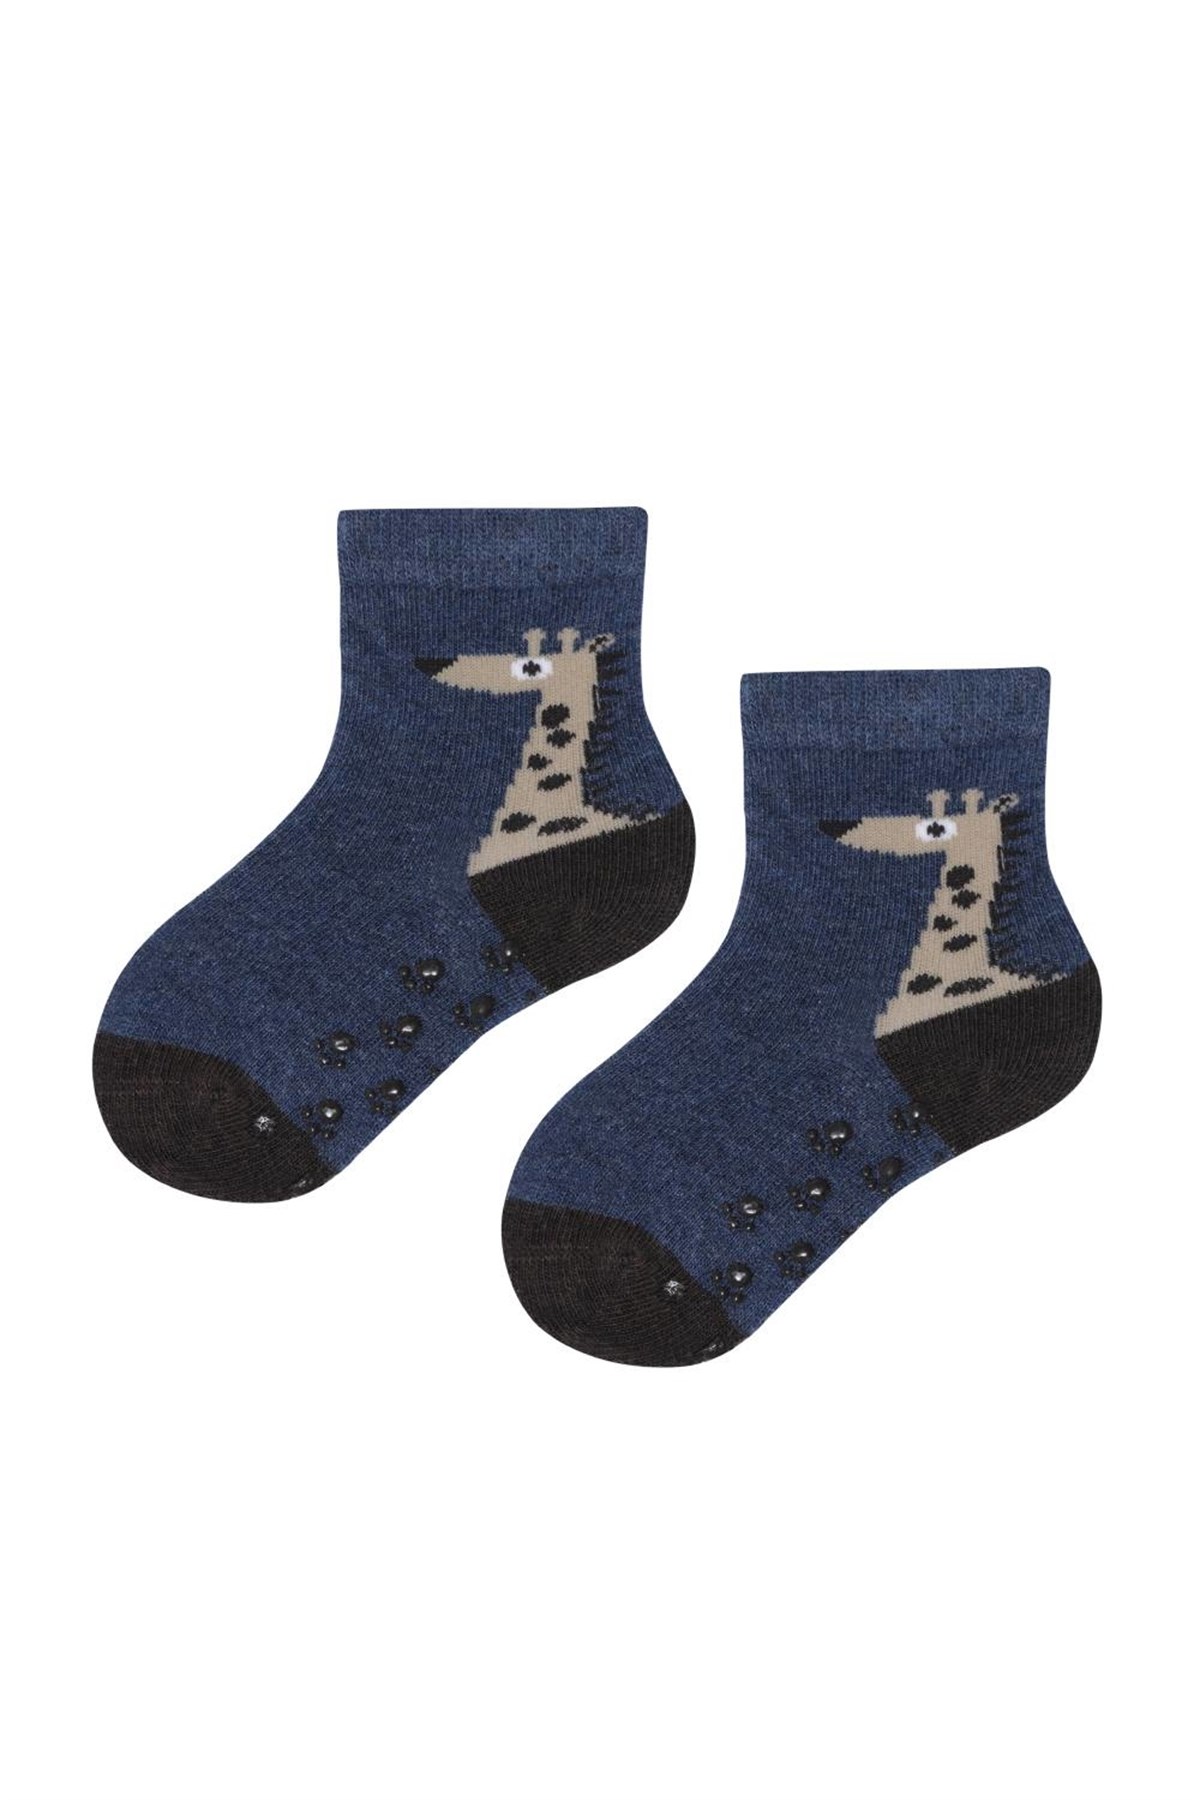 Giraffe Bebek Soket Çorap 2'li-MAVİ/Bej